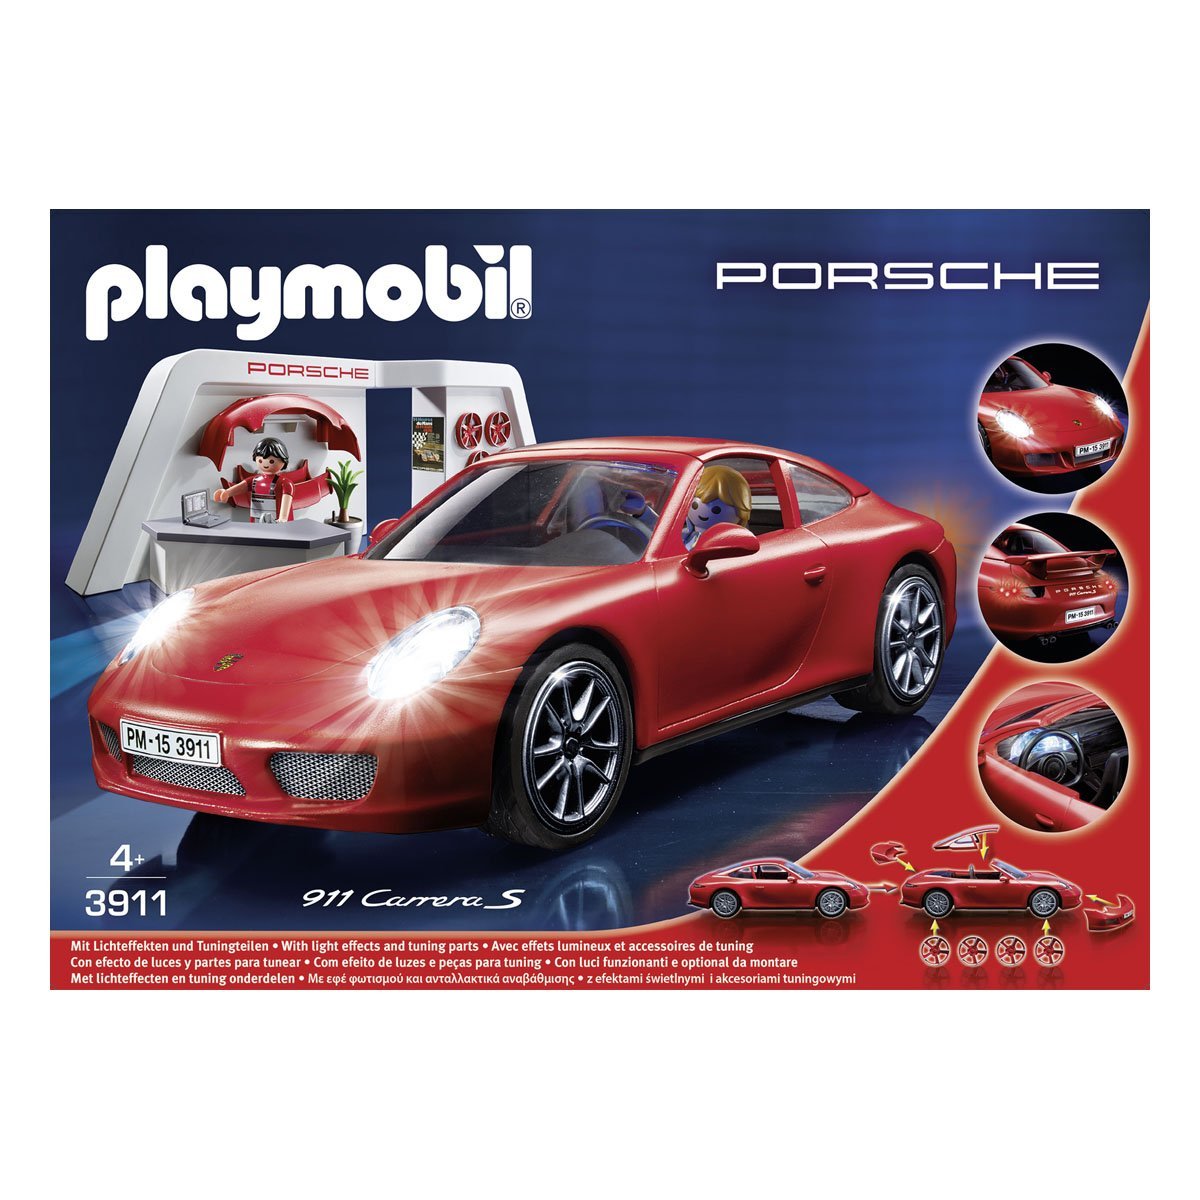 Porsche 911 Carreras Playmobil